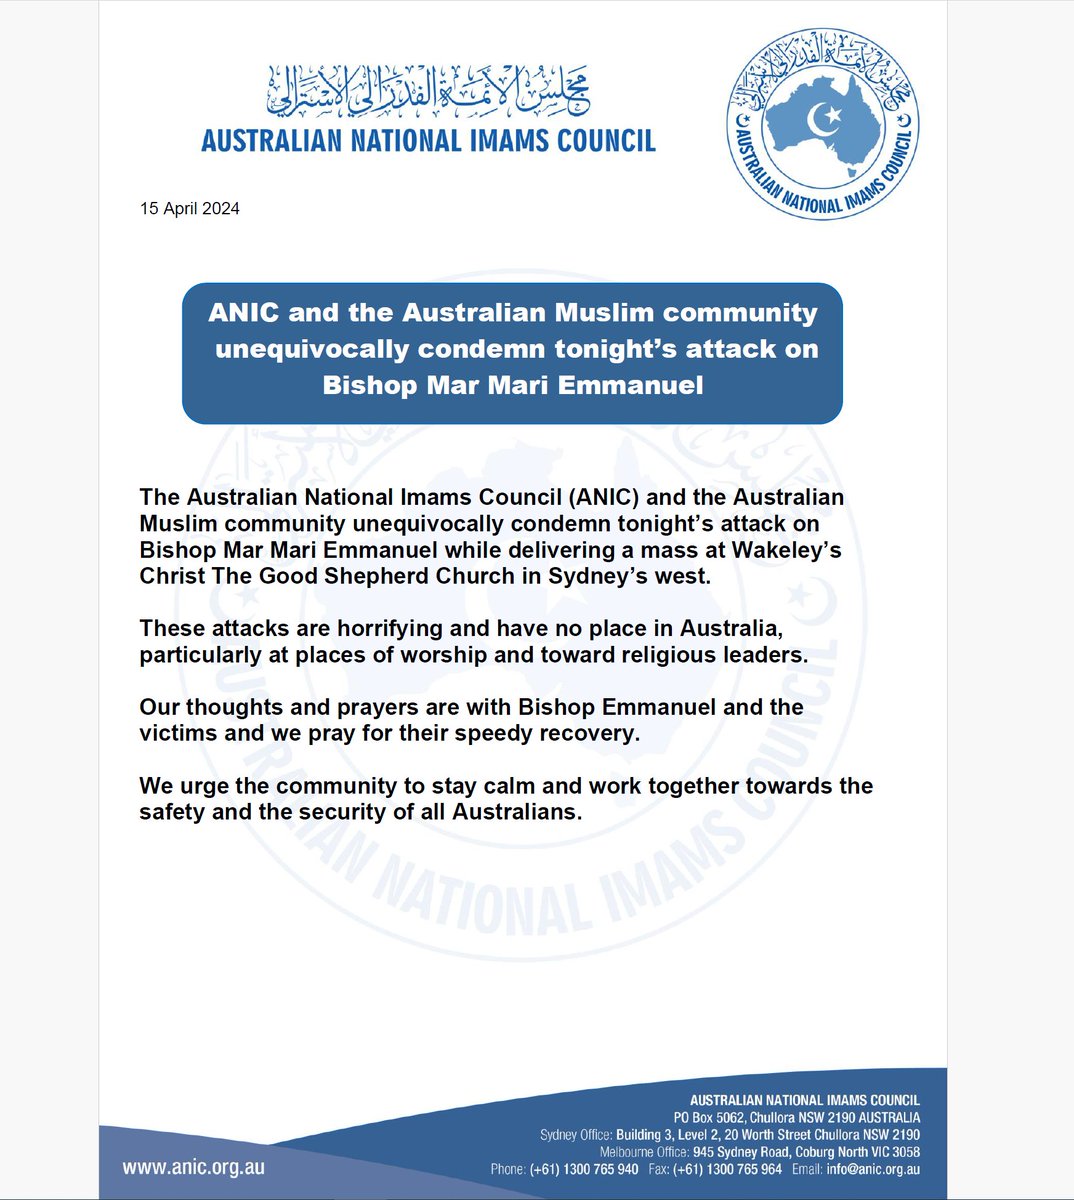 ANIC and the Australian Muslim community unequivocally condemn tonight’s attack on Bishop Mar Mari Emmanuel